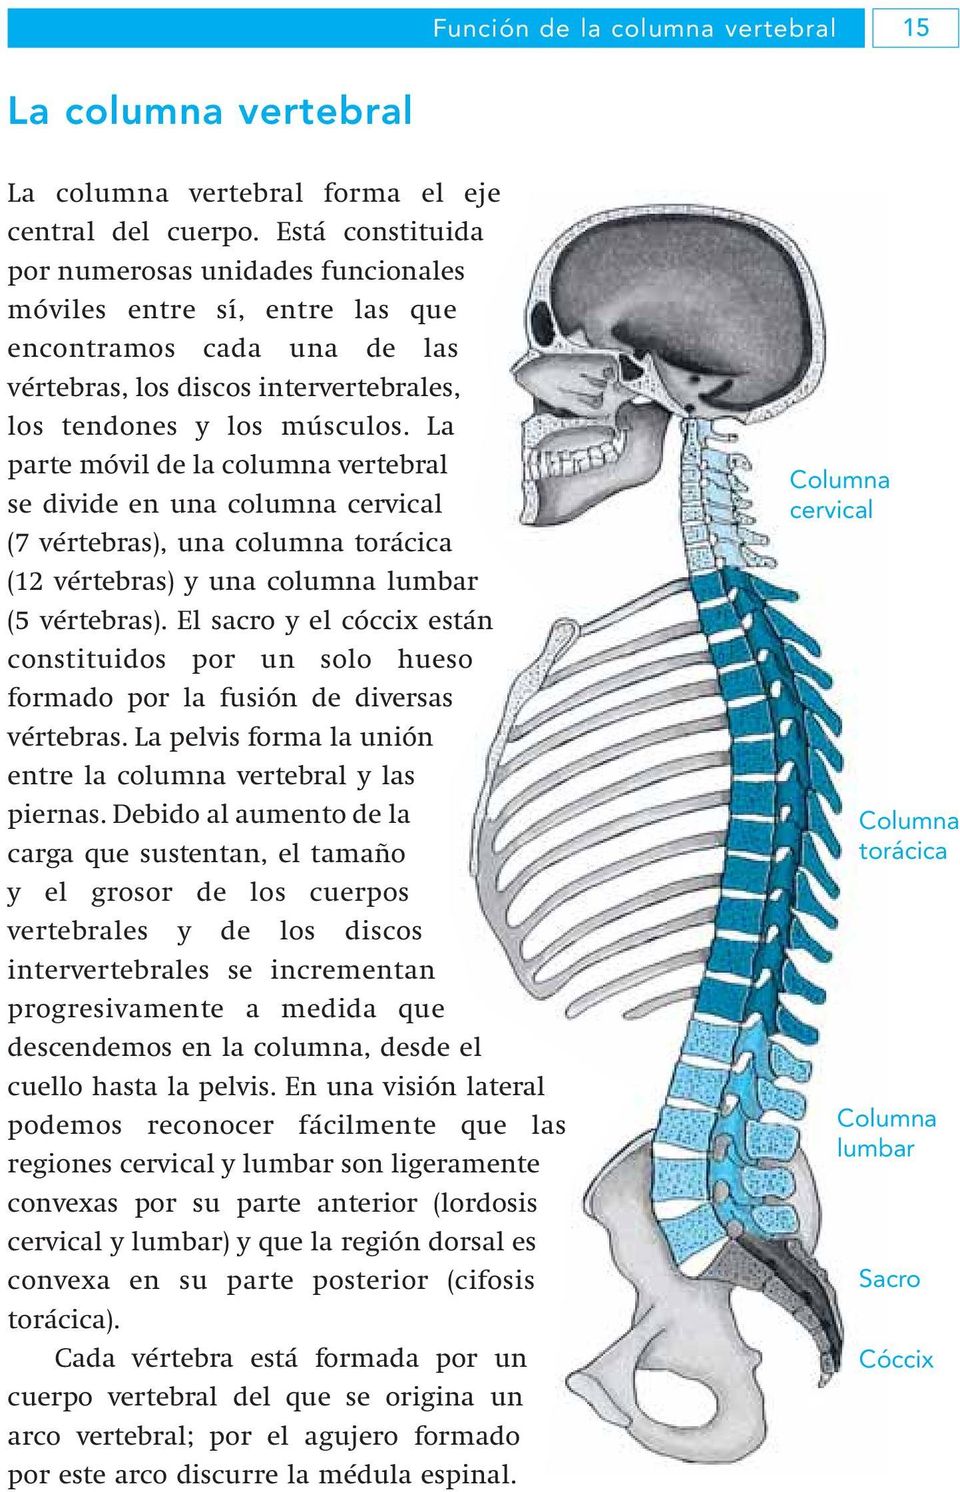 La parte móvil de la columna vertebral se divide en una columna cervical (7 vértebras), una columna torácica (12 vértebras) y una columna lumbar (5 vértebras).